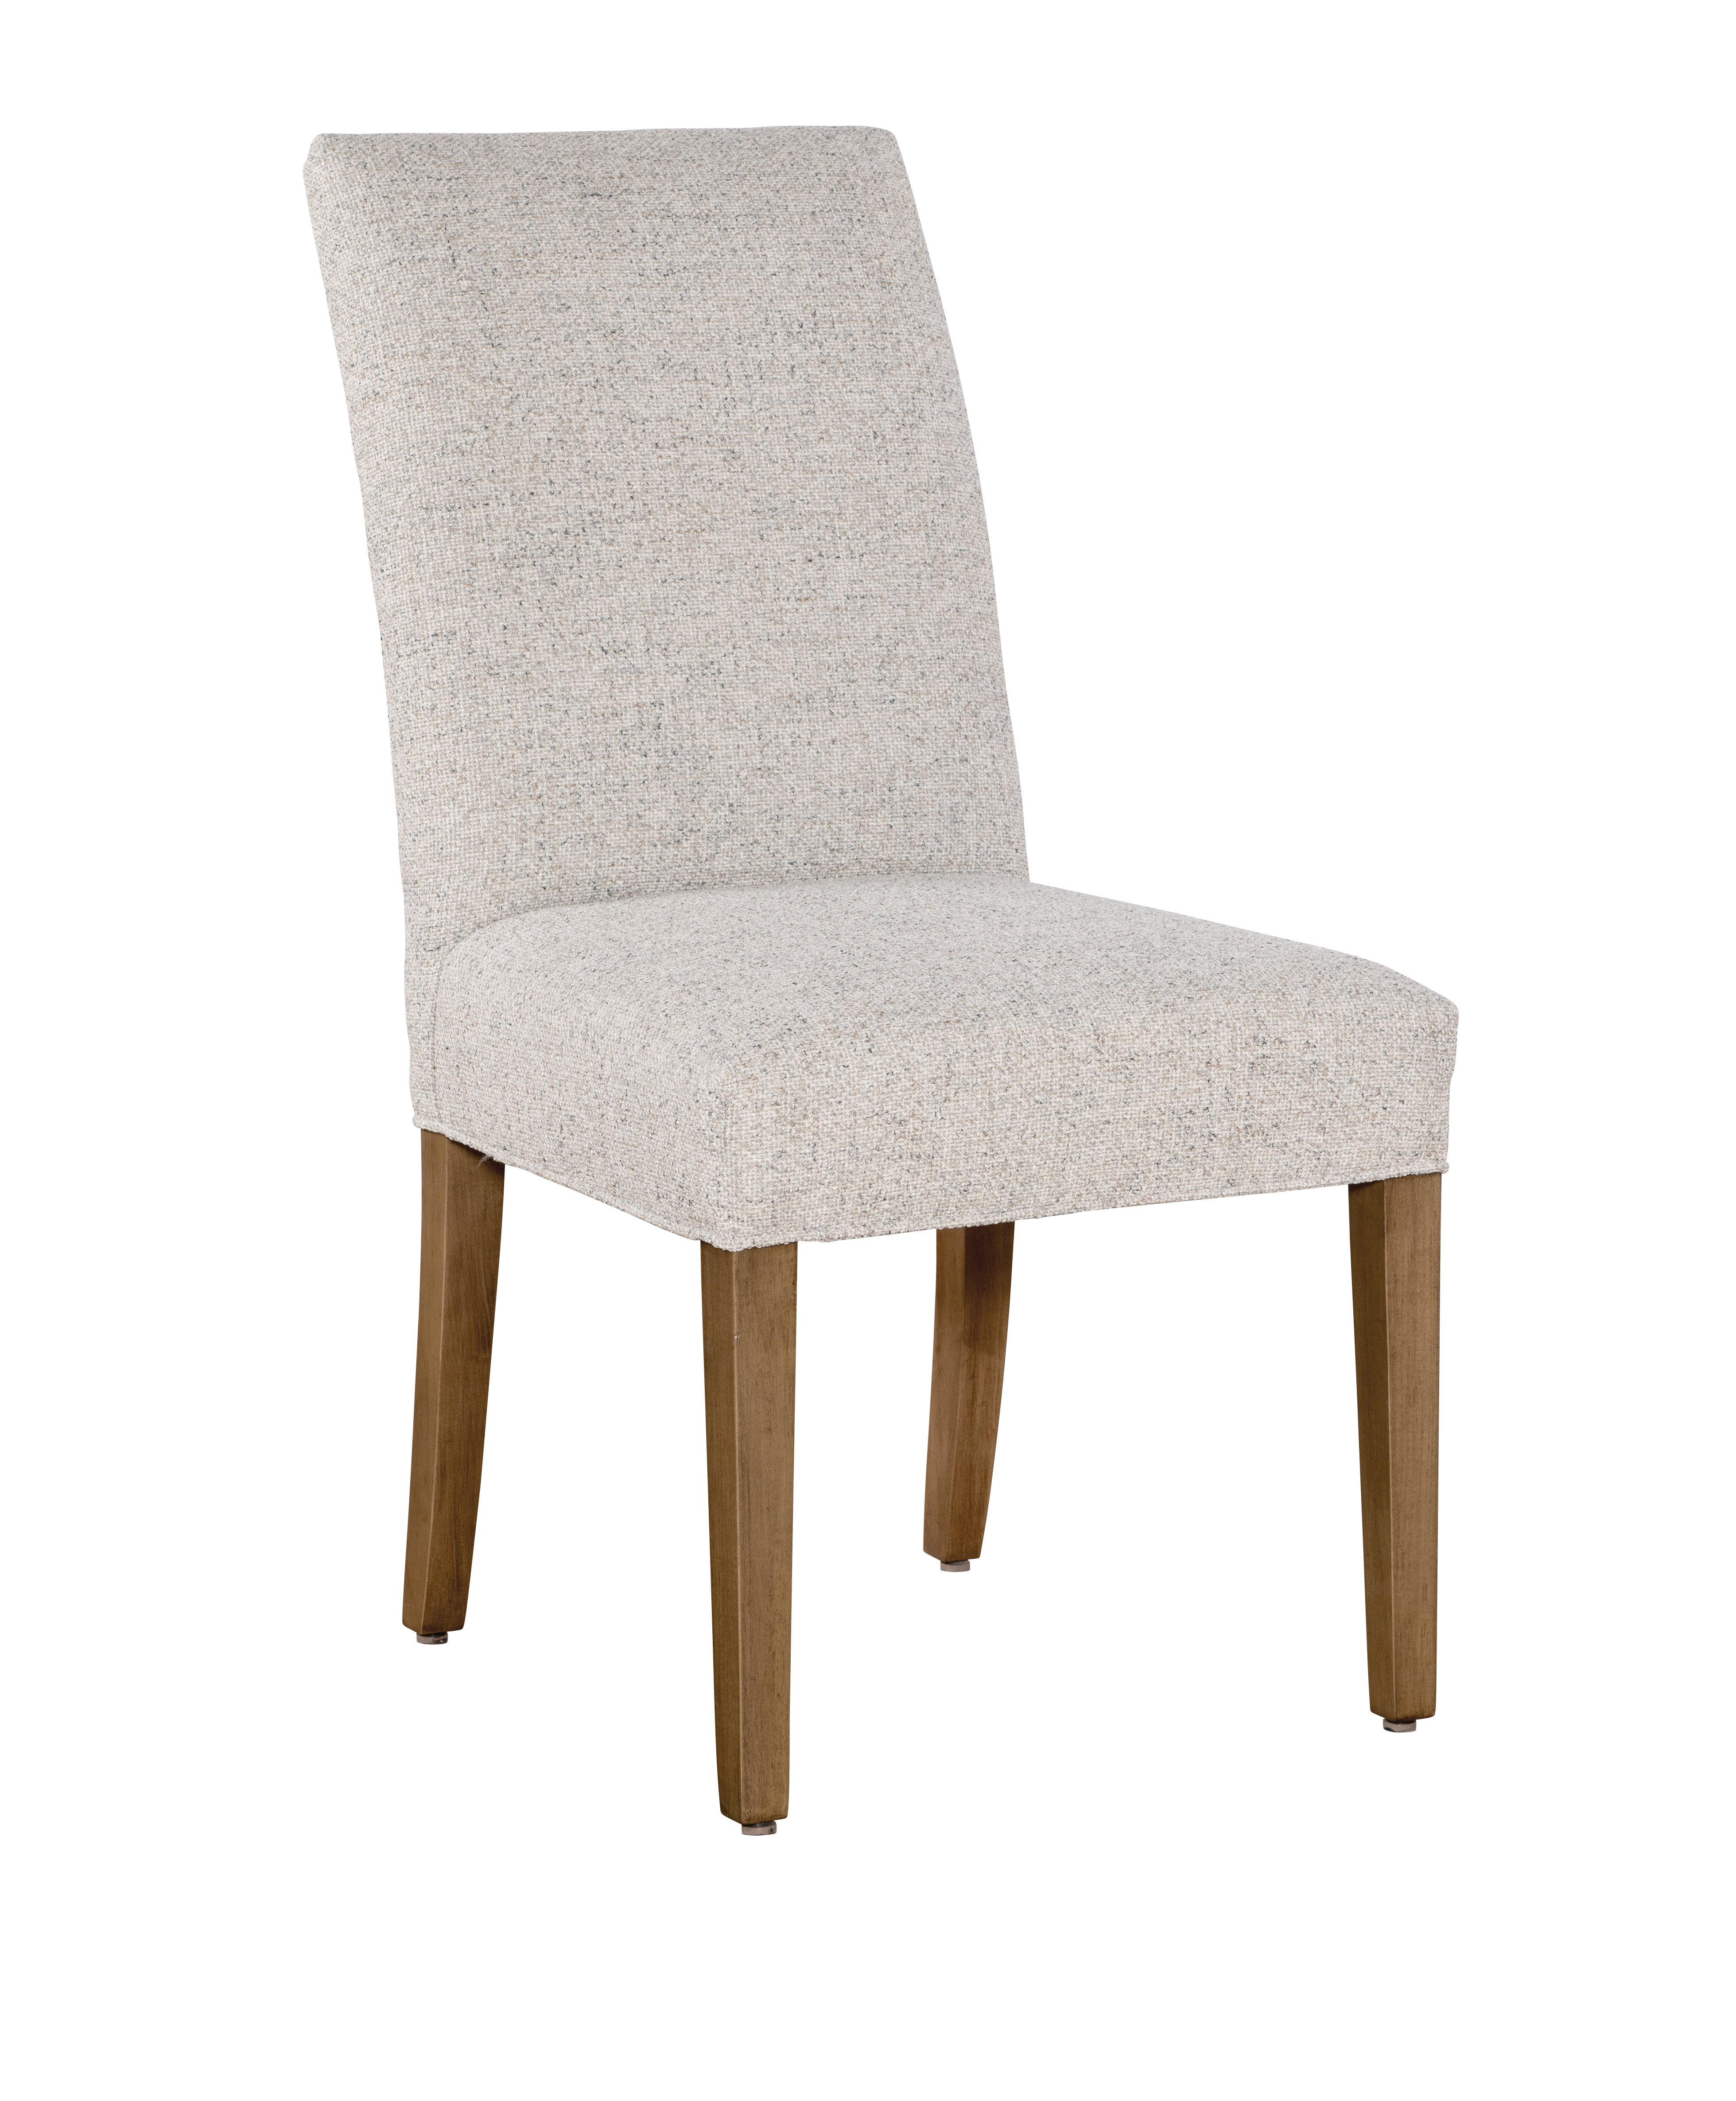 Straight Chair - Original Design